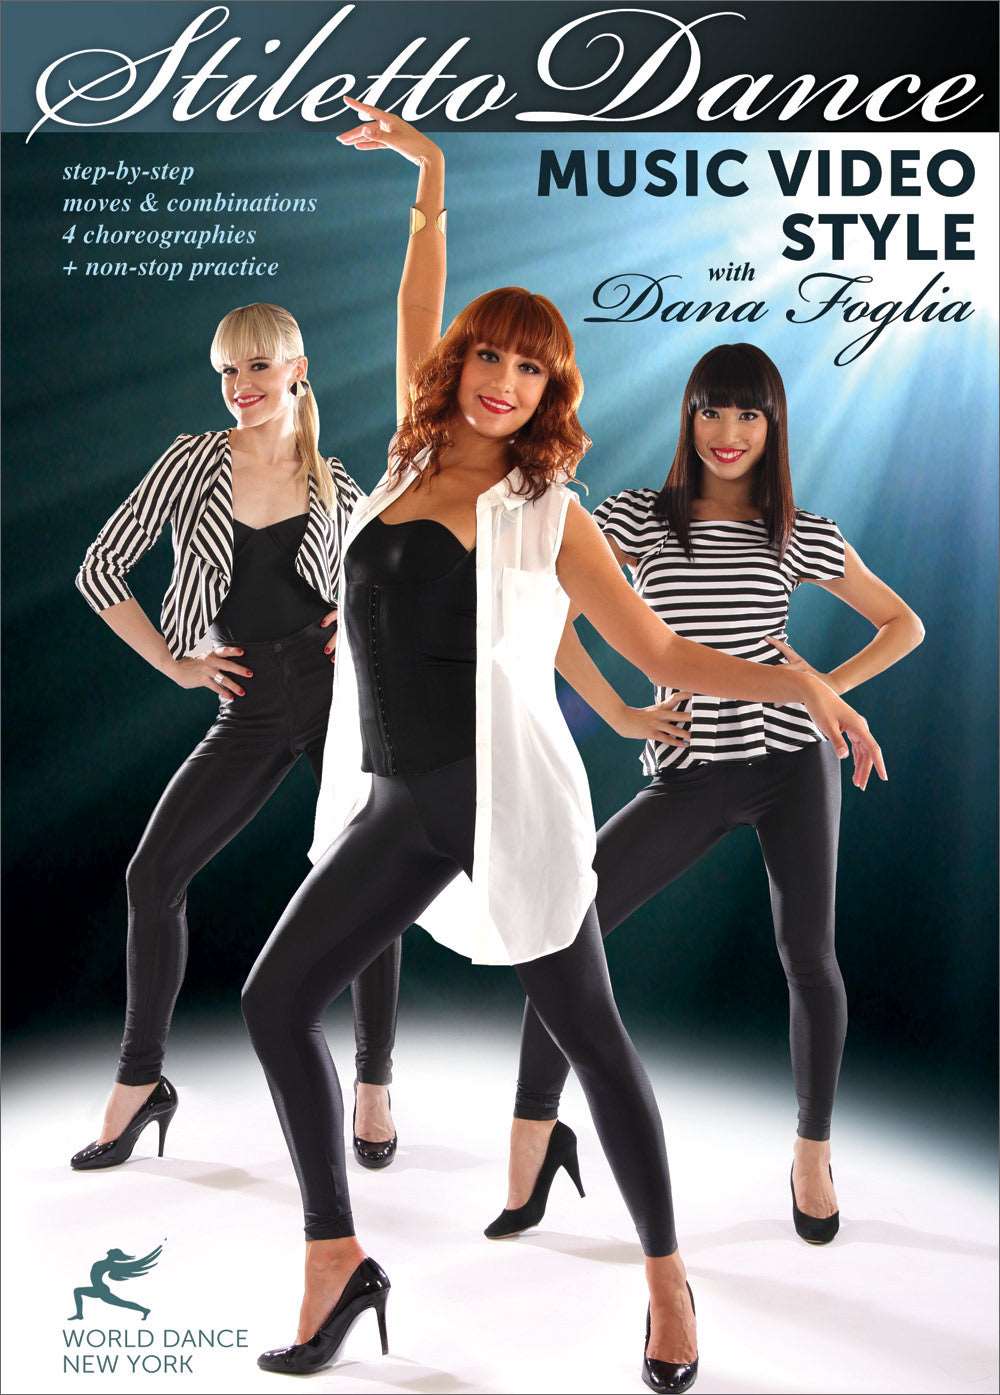 "Stiletto Dance - Music Video Style, with Dana Foglia" DVD - World Dance New York